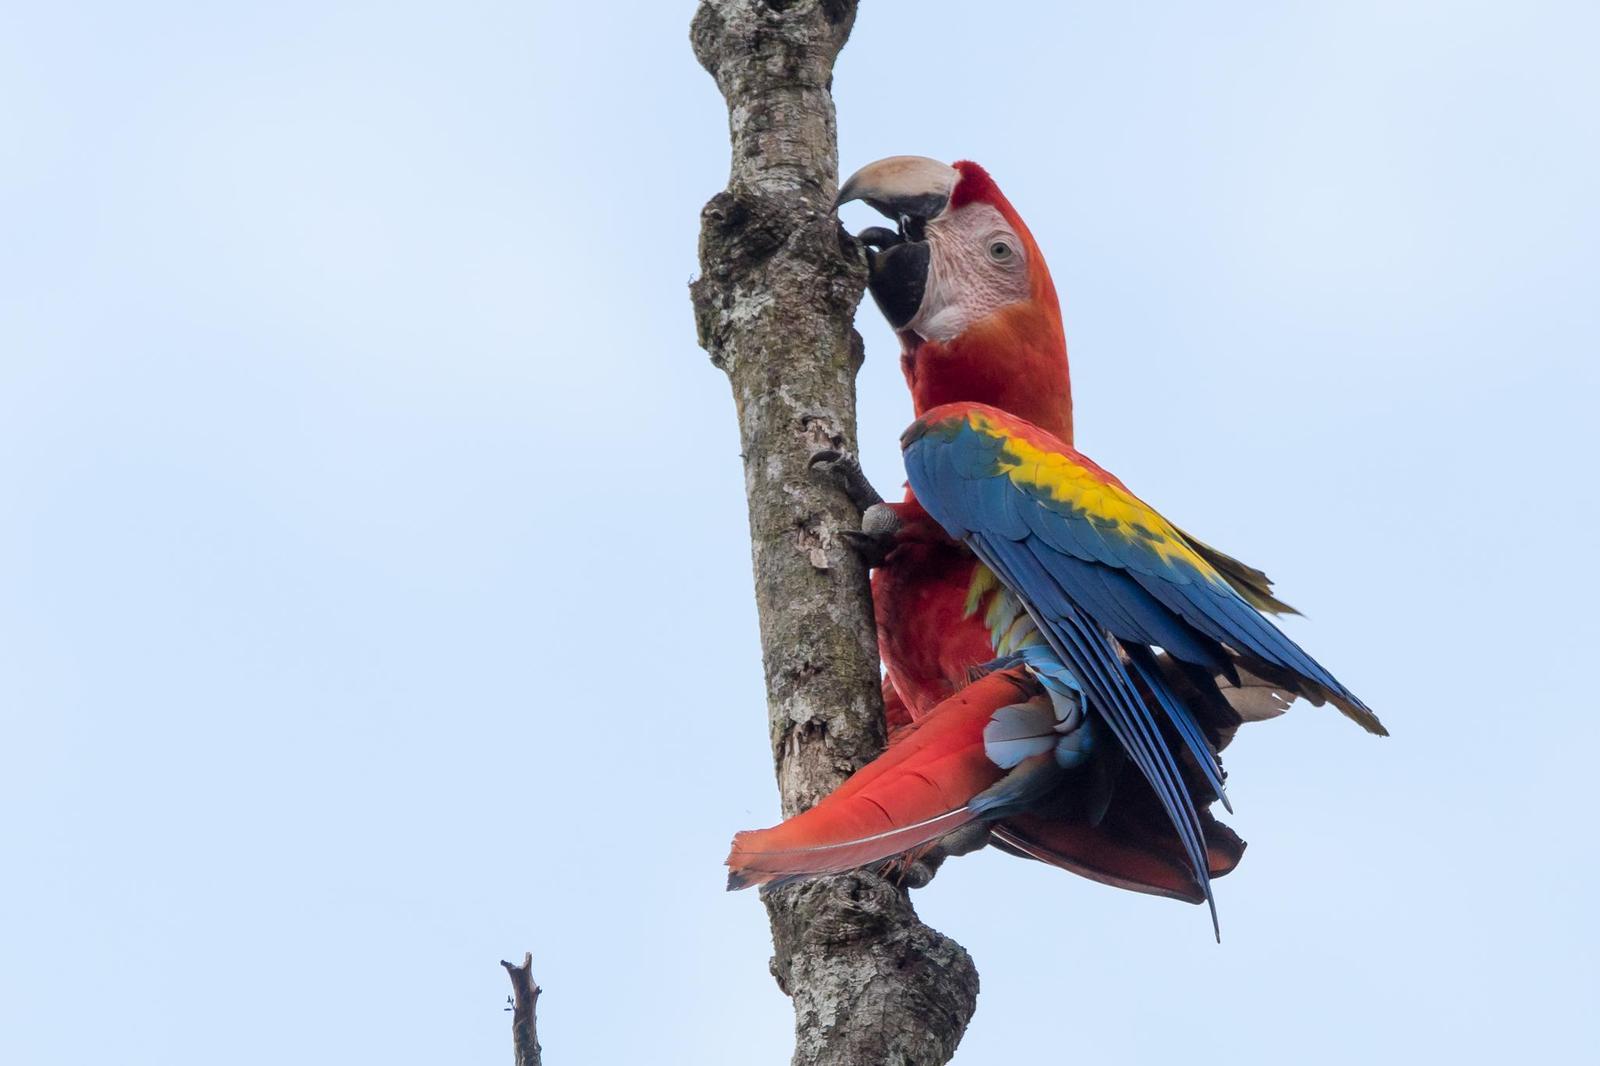 Scarlet Macaw Photo by Gerald Hoekstra